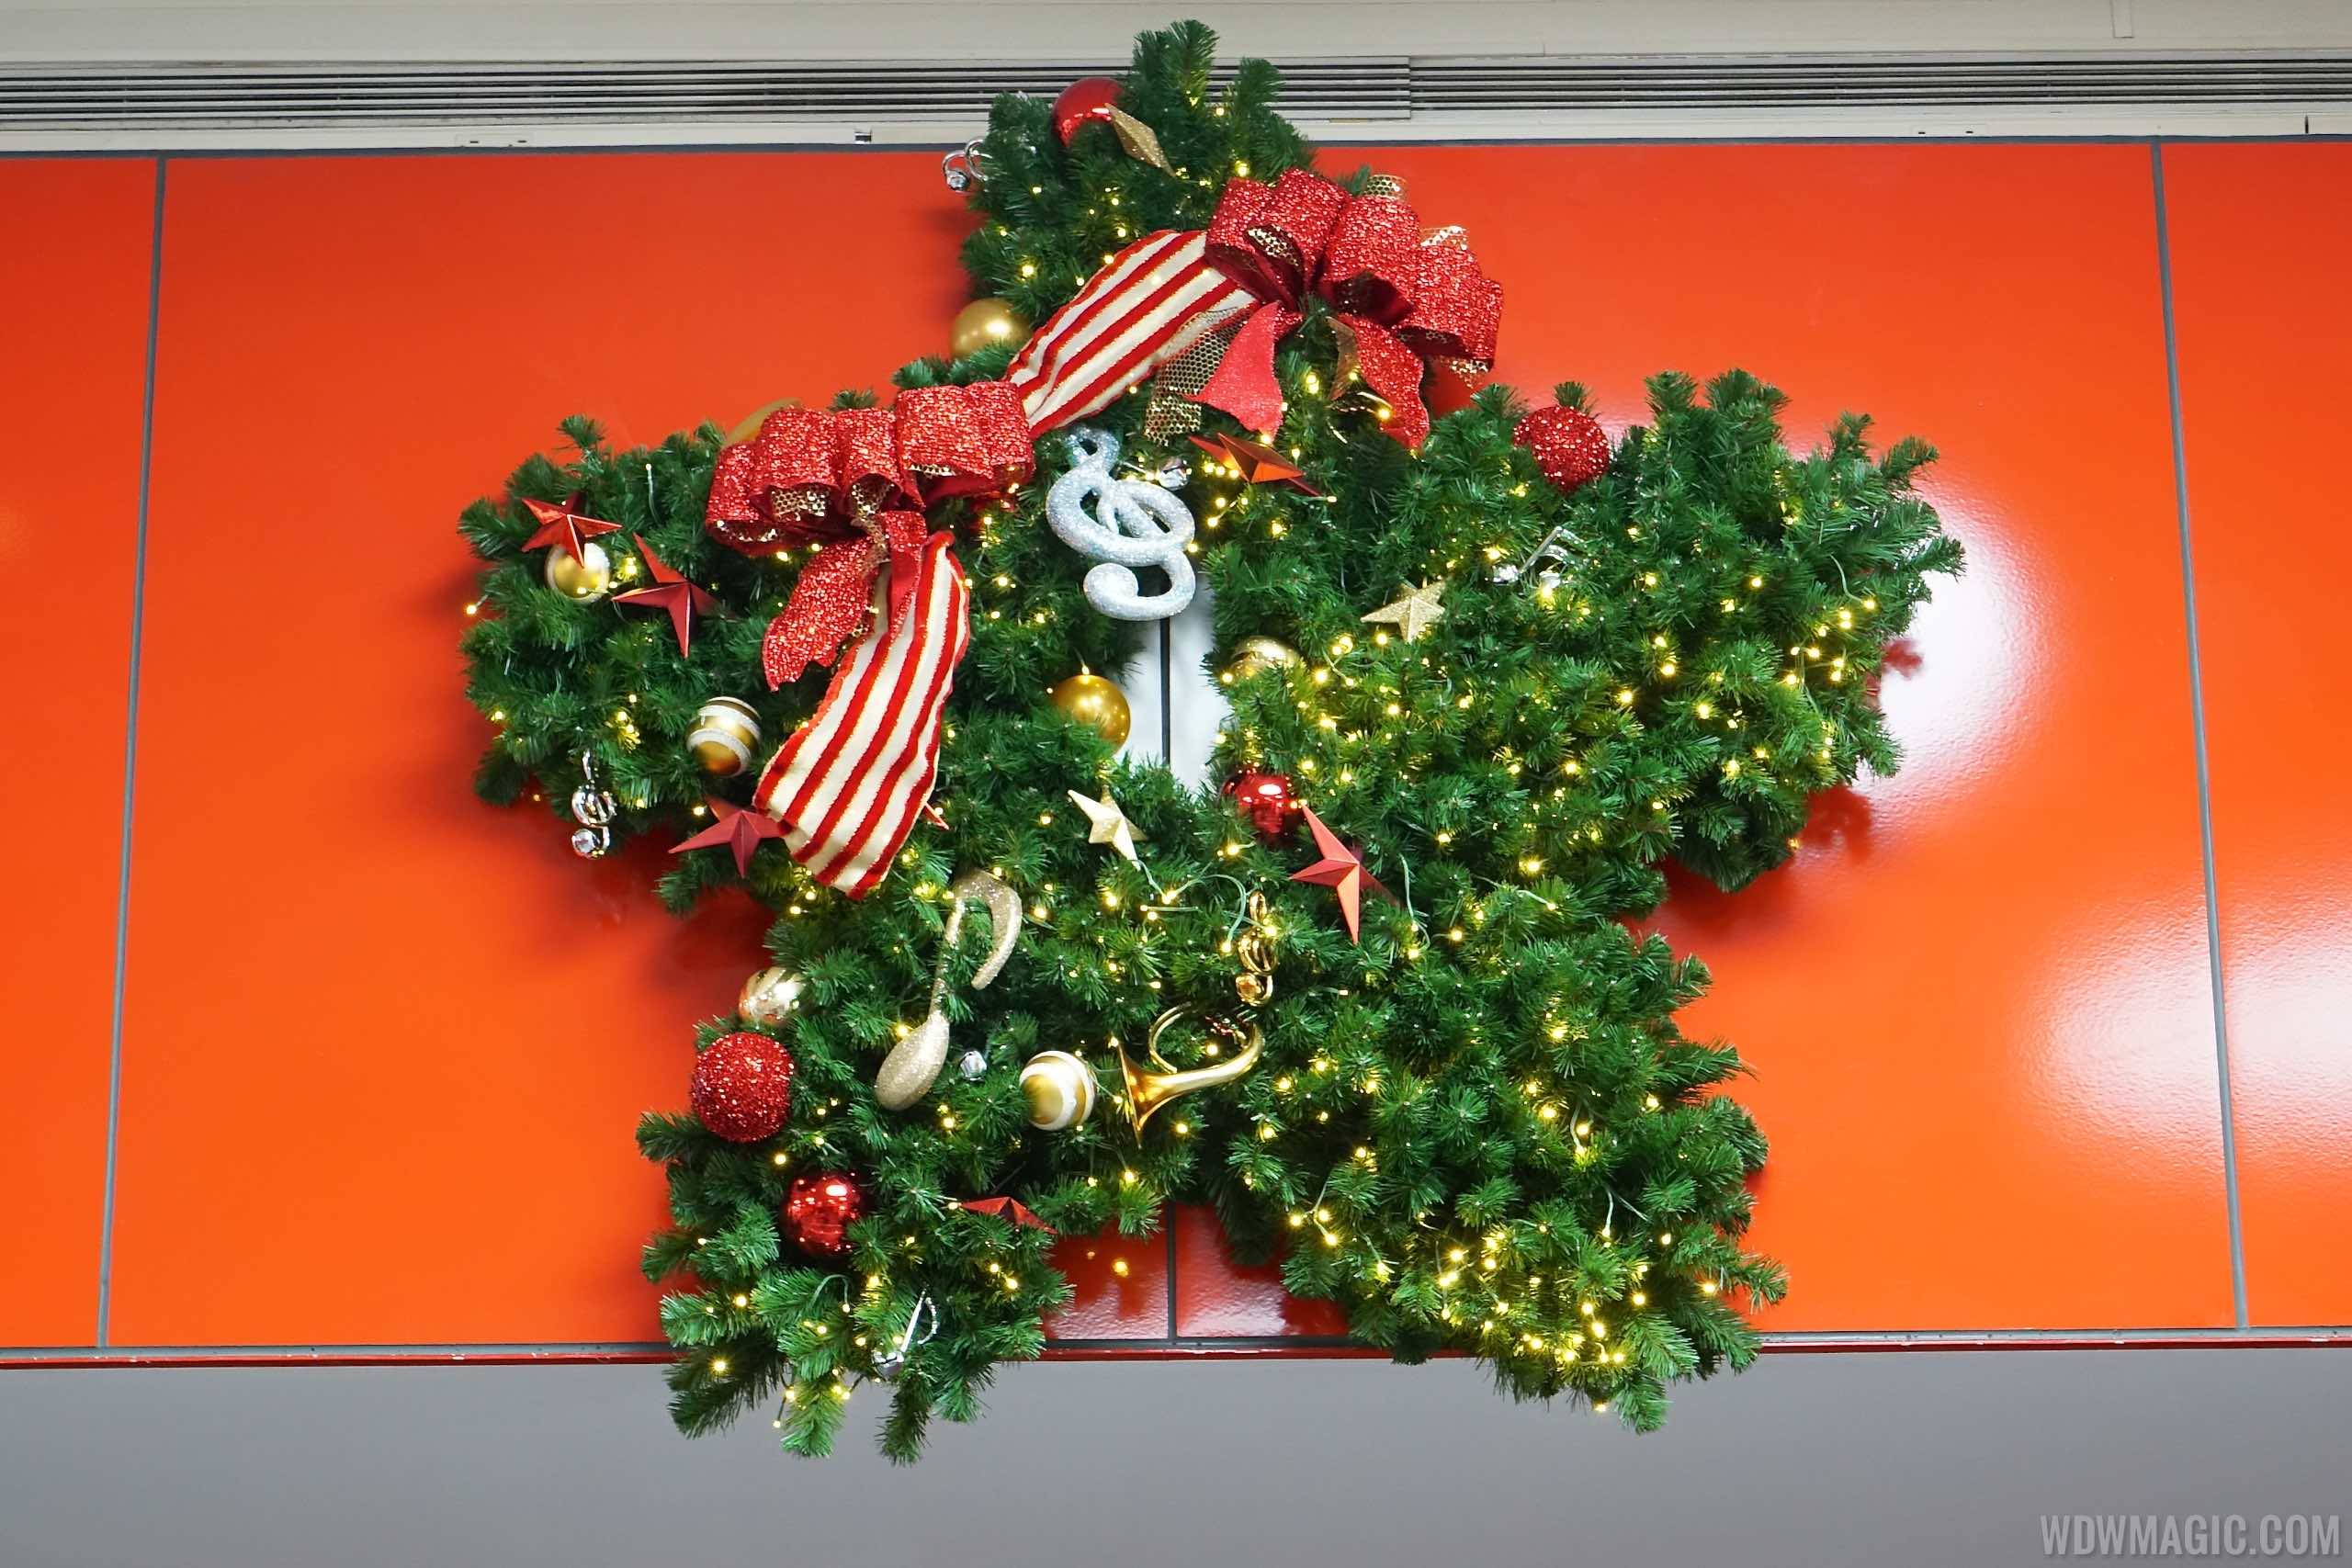 PHOTOS - Holiday decorations at Disney's All Star Music Resort